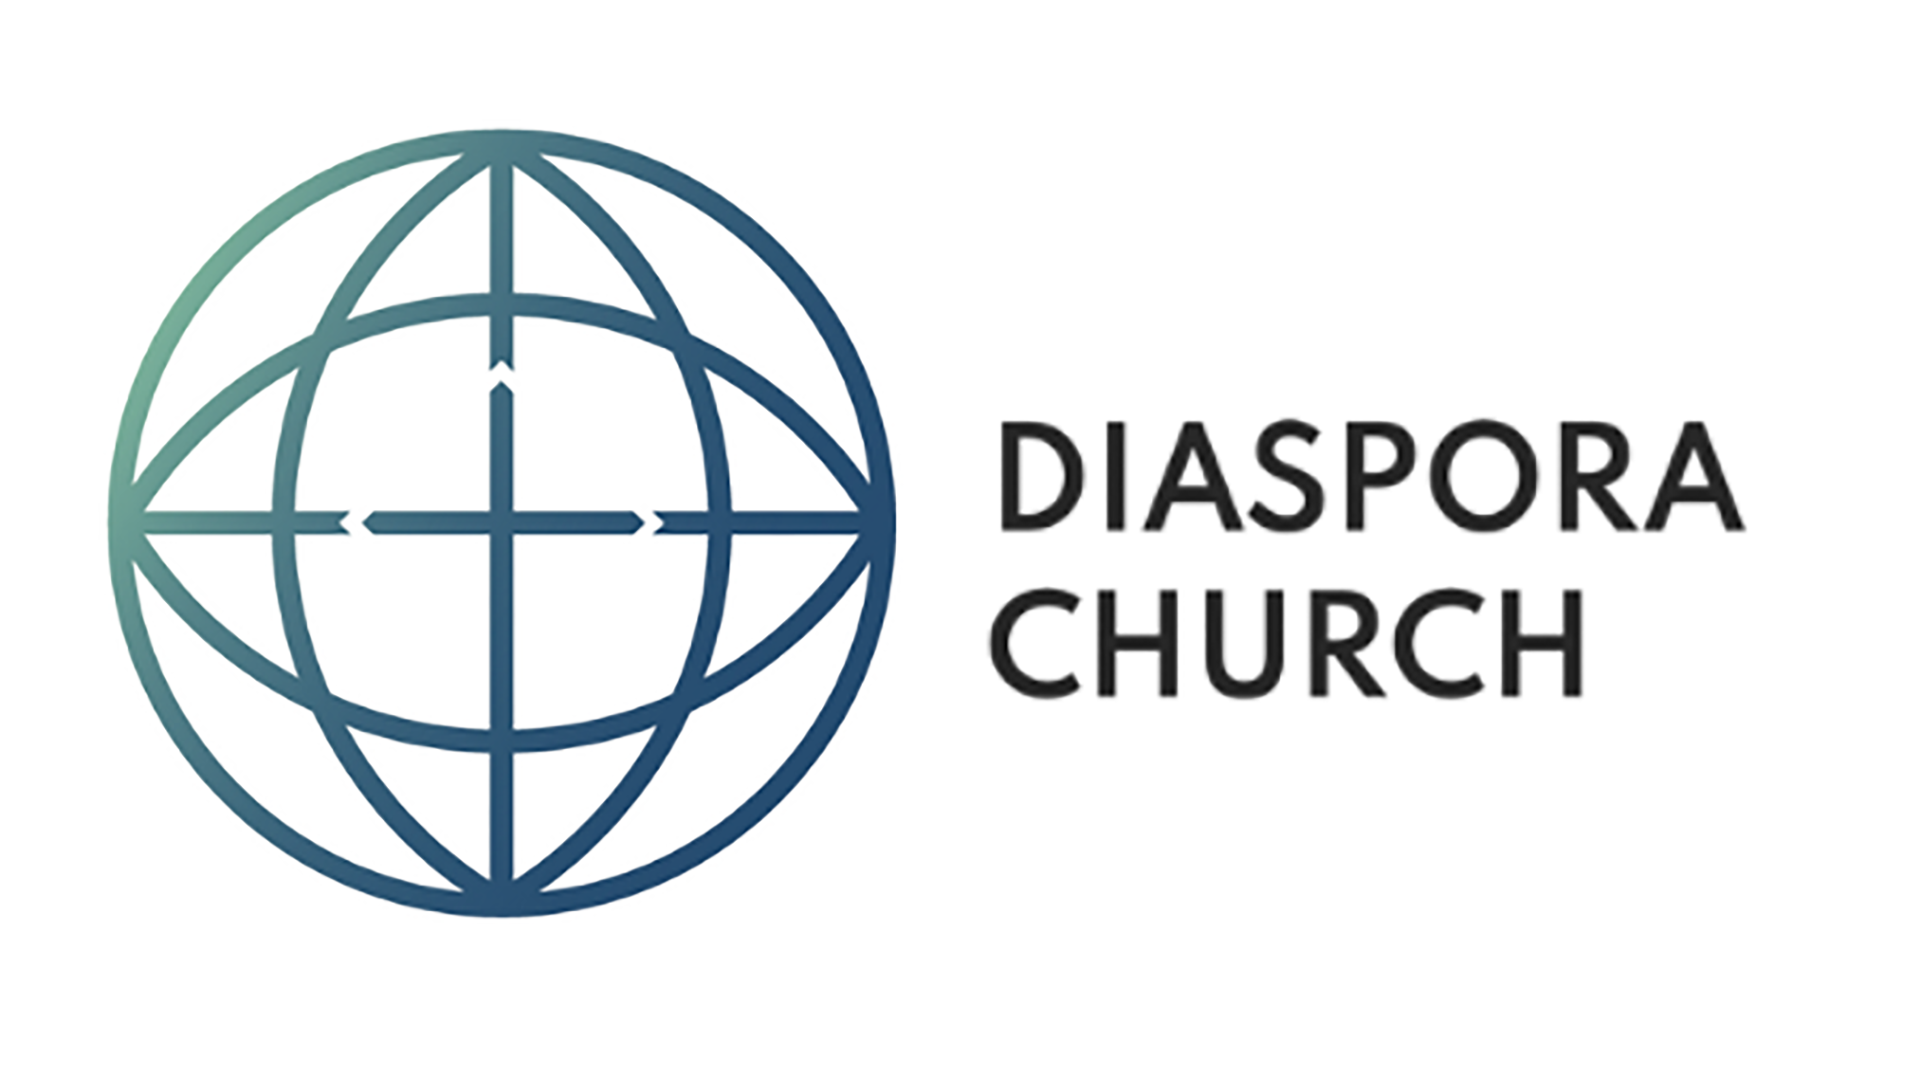 Diaspora Church logo